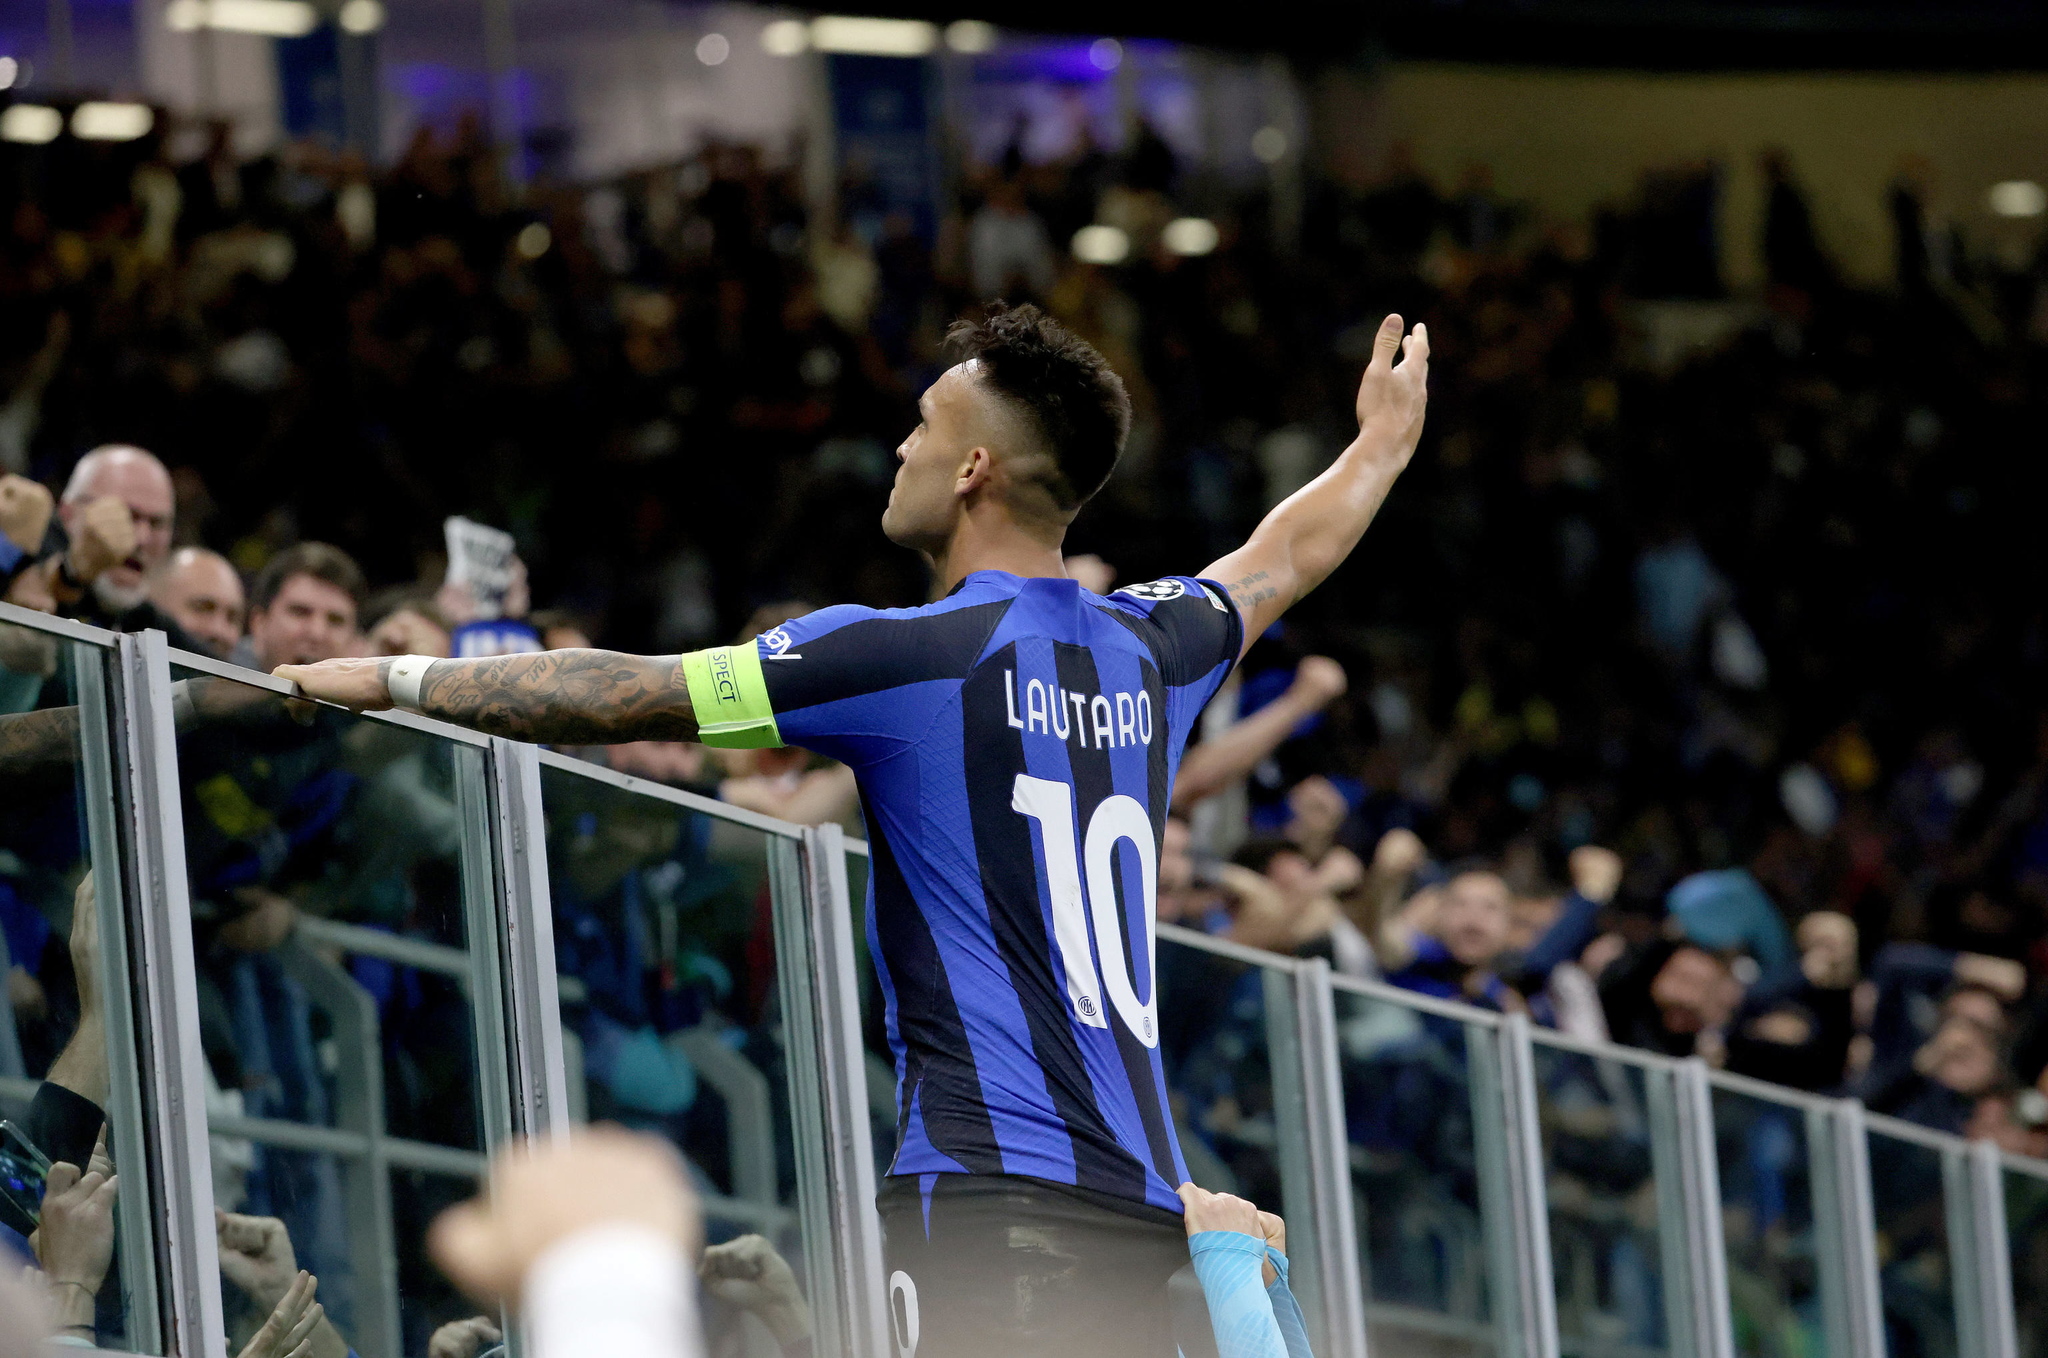 Lautaro celebrates his goal in the semi-final against AC Milan.